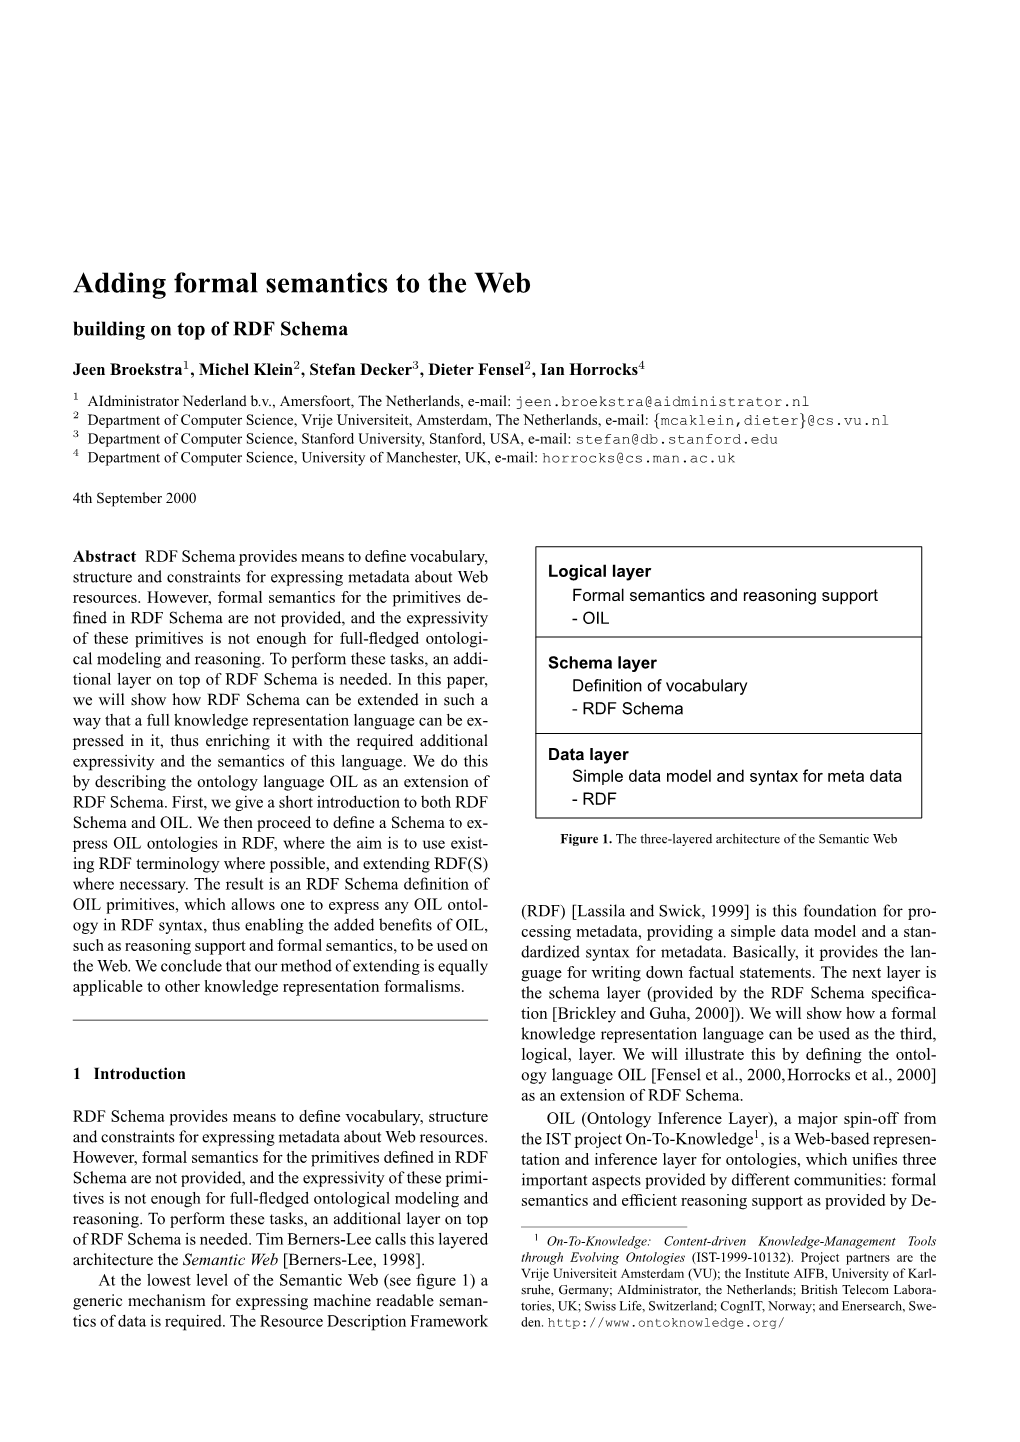 Adding Formal Semantics to the Web Building on Top of RDF Schema